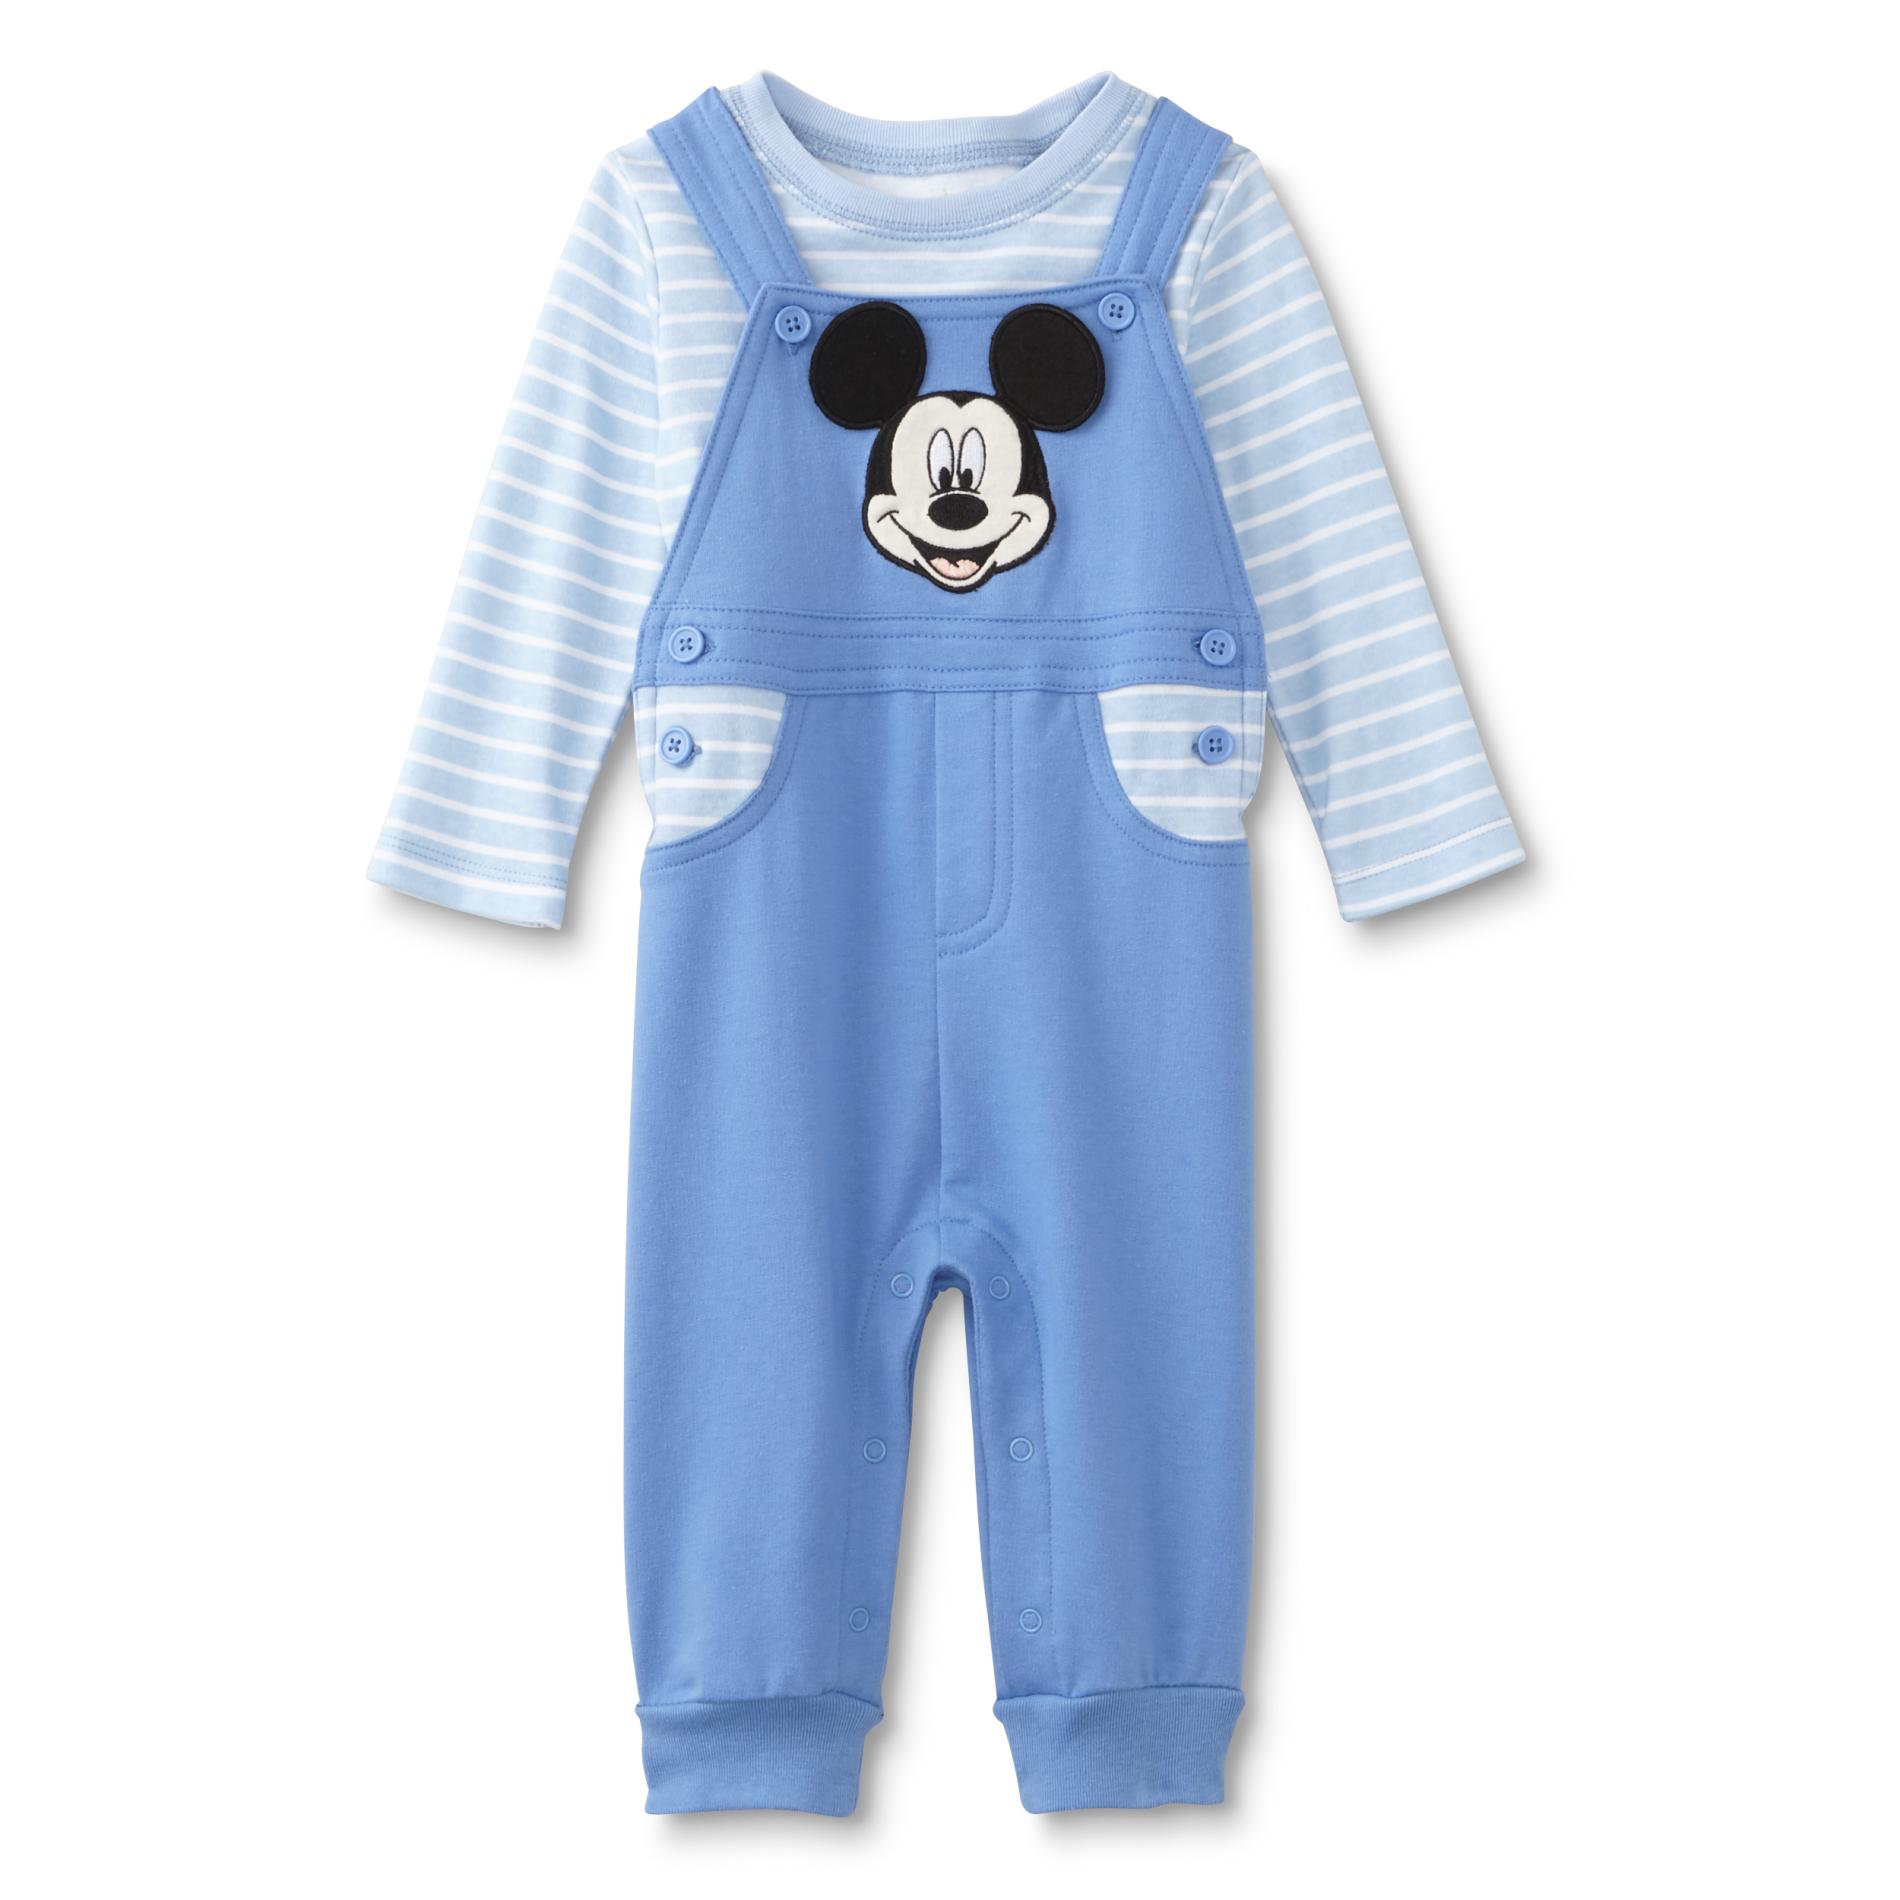 Disney Mickey Mouse Newborn & Infant Boy's Overalls & Shirt